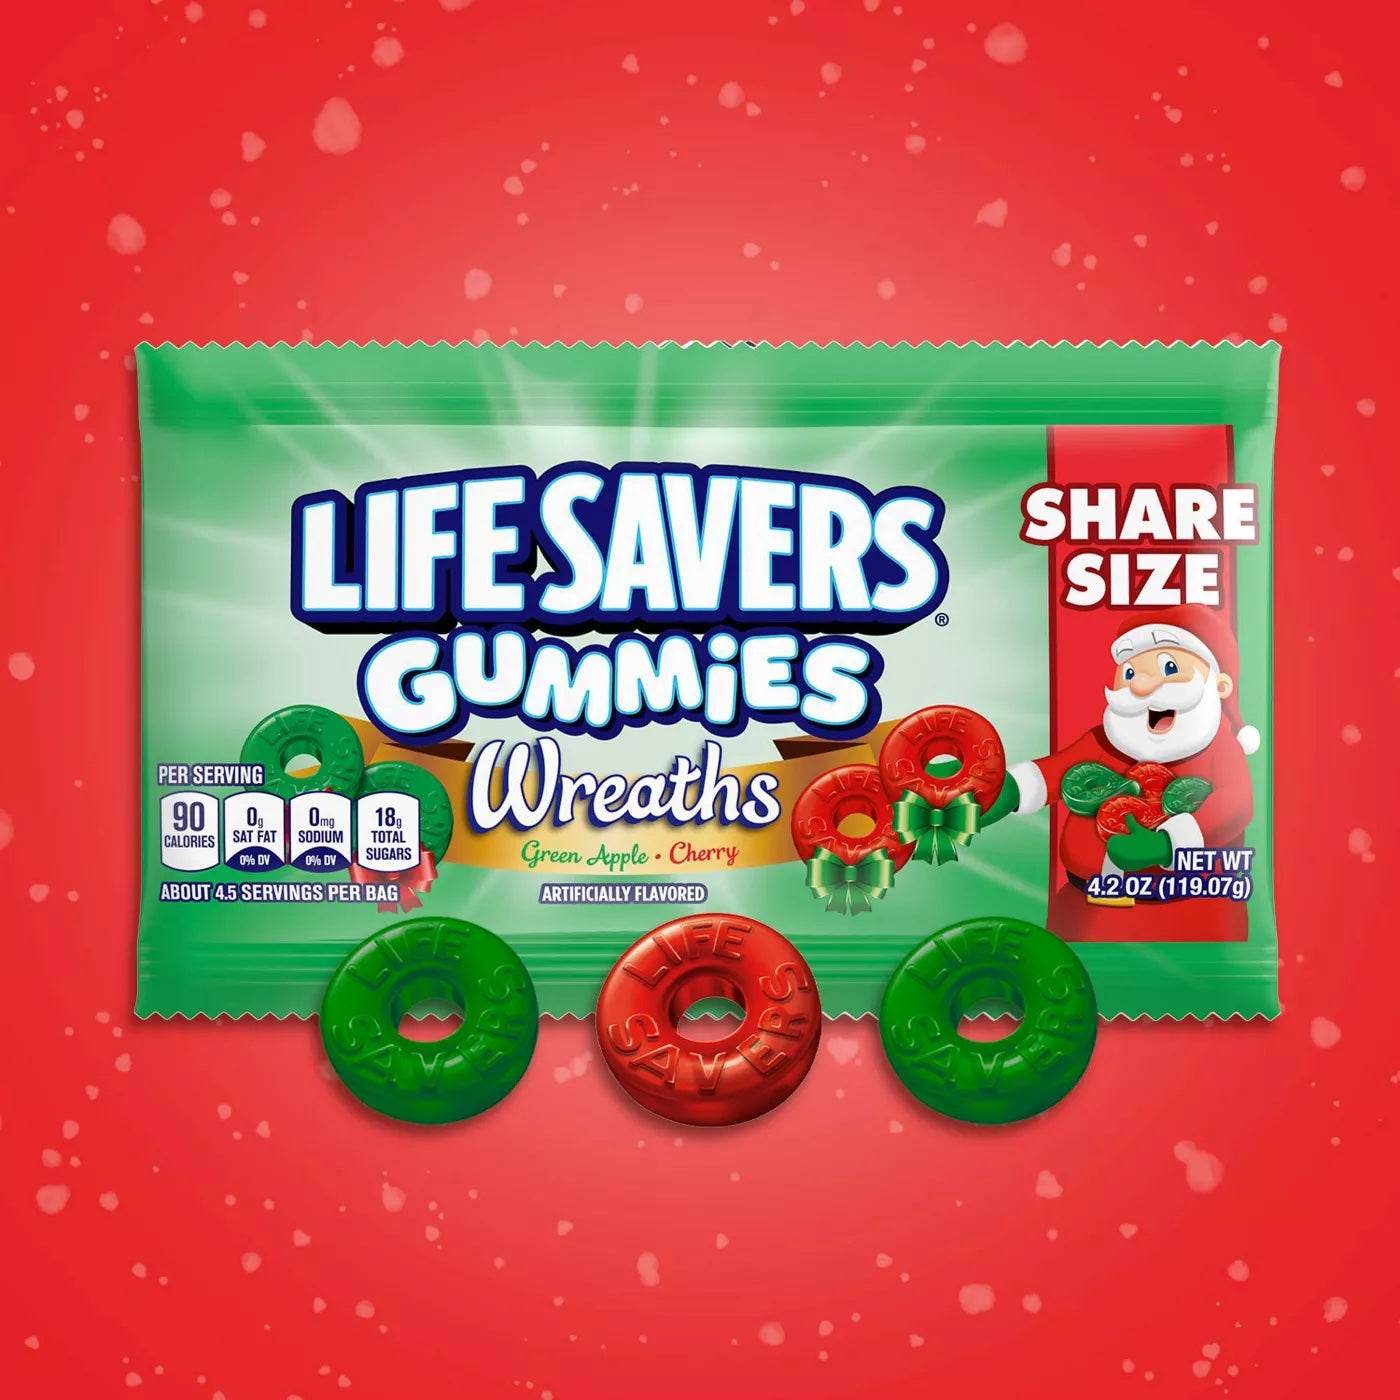 Lifesavers Gummies Wreaths, Share Size, 4.2oz